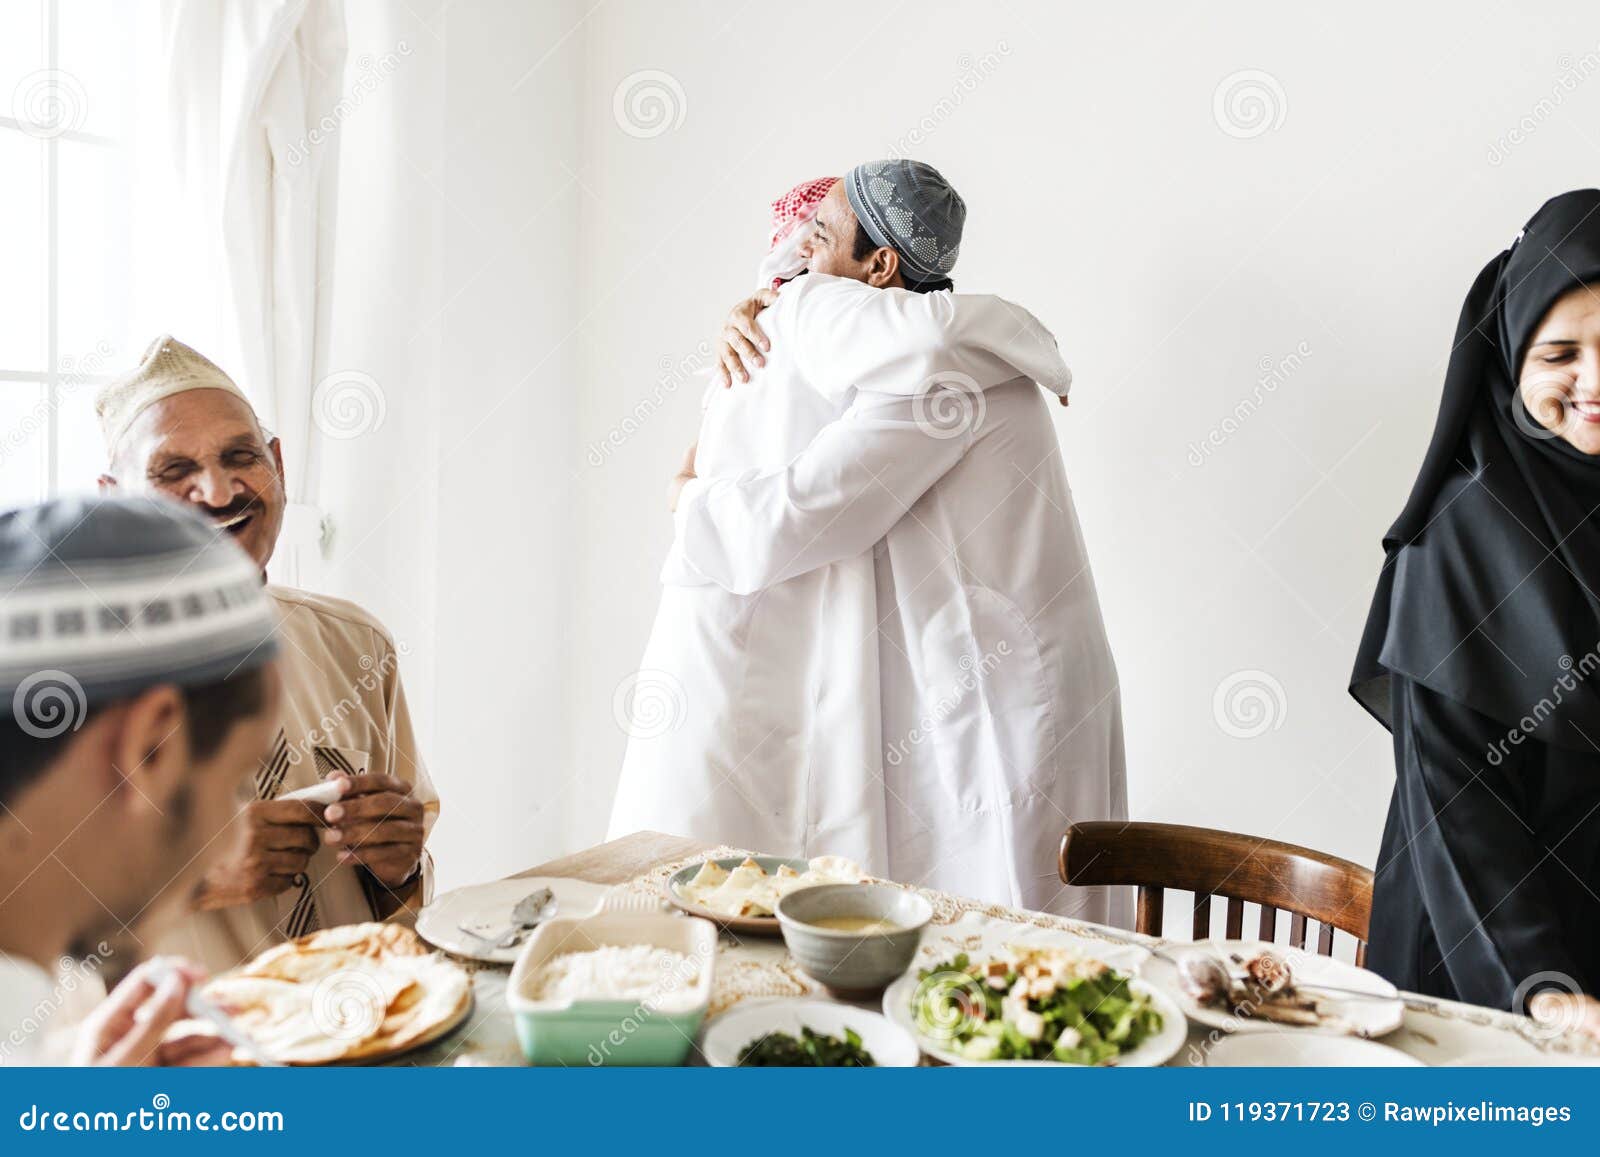 muslim men hugging at lunchtime